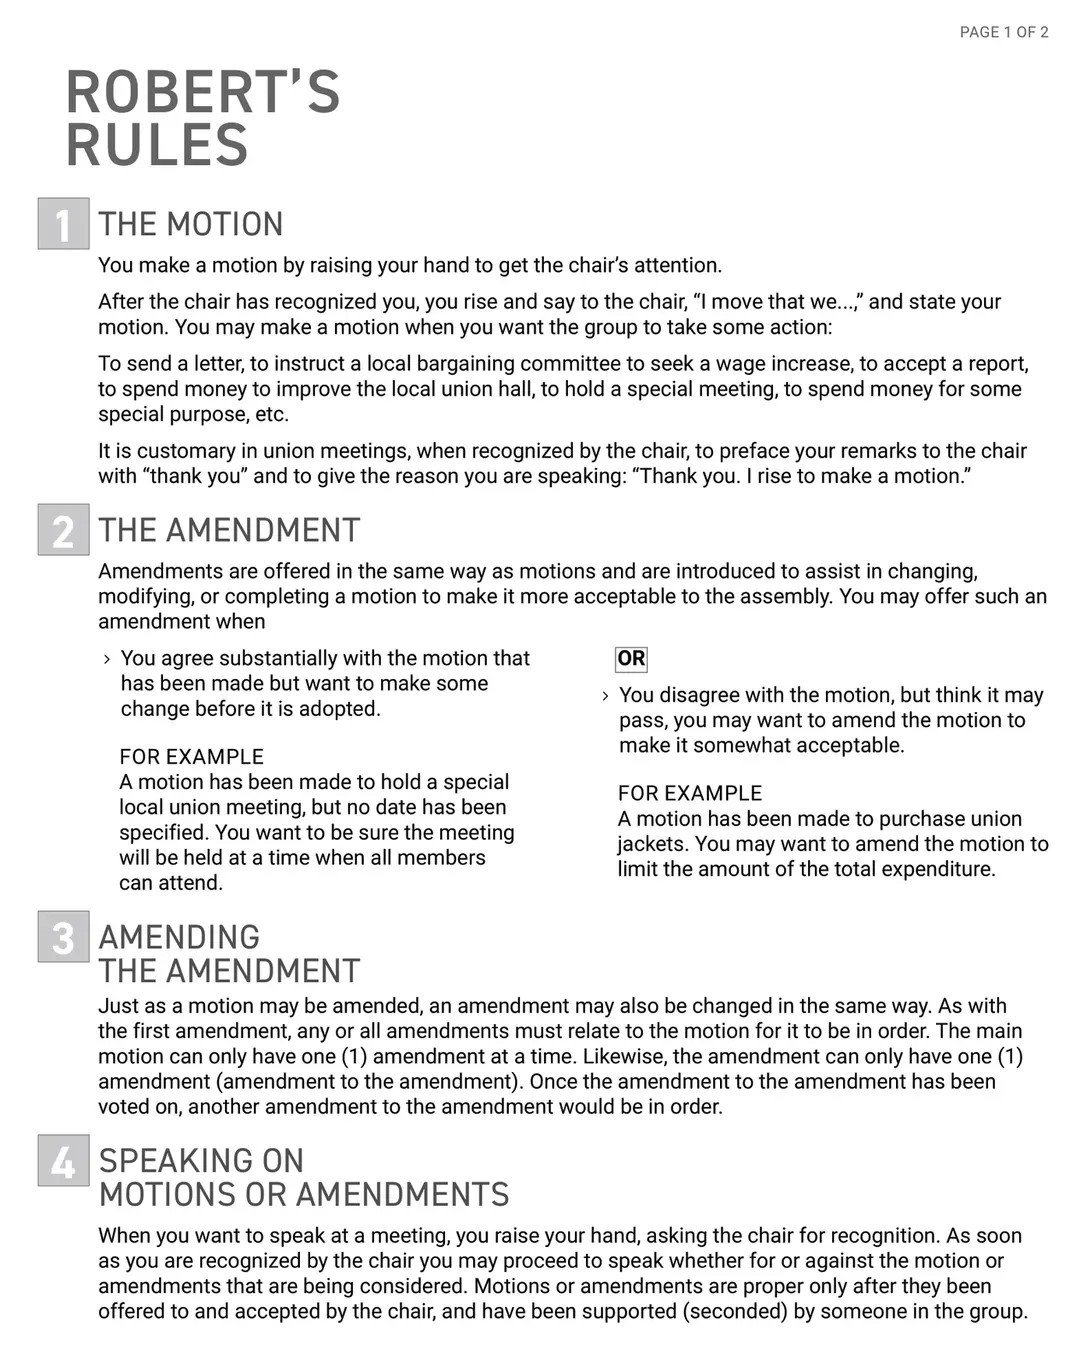 Robert&rsquo;s Rules Basics. WEDs (Wednesday Education 🎓 Day Spectacular). @AlbertaNurses #abnurses

https://www.una.ca/document/robertsrules